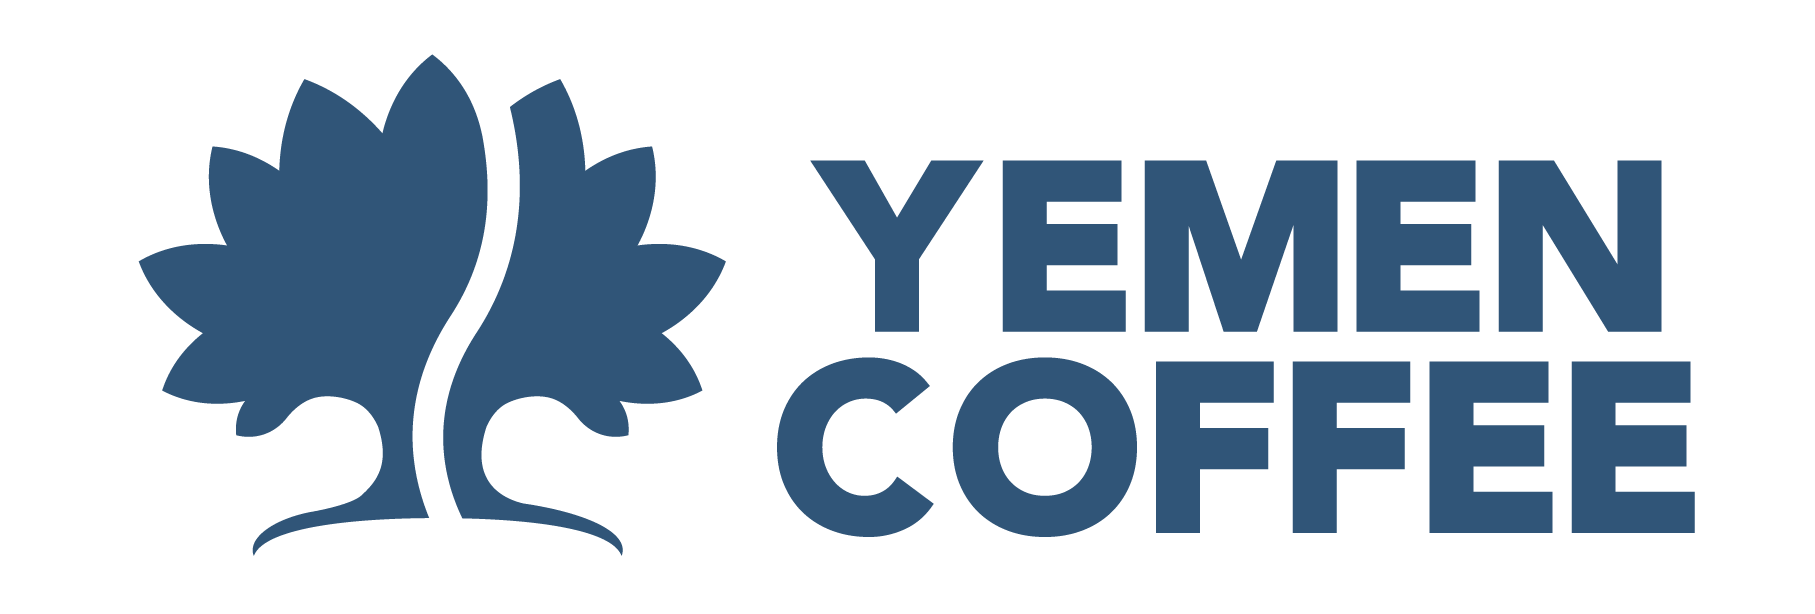 قهوه یمن